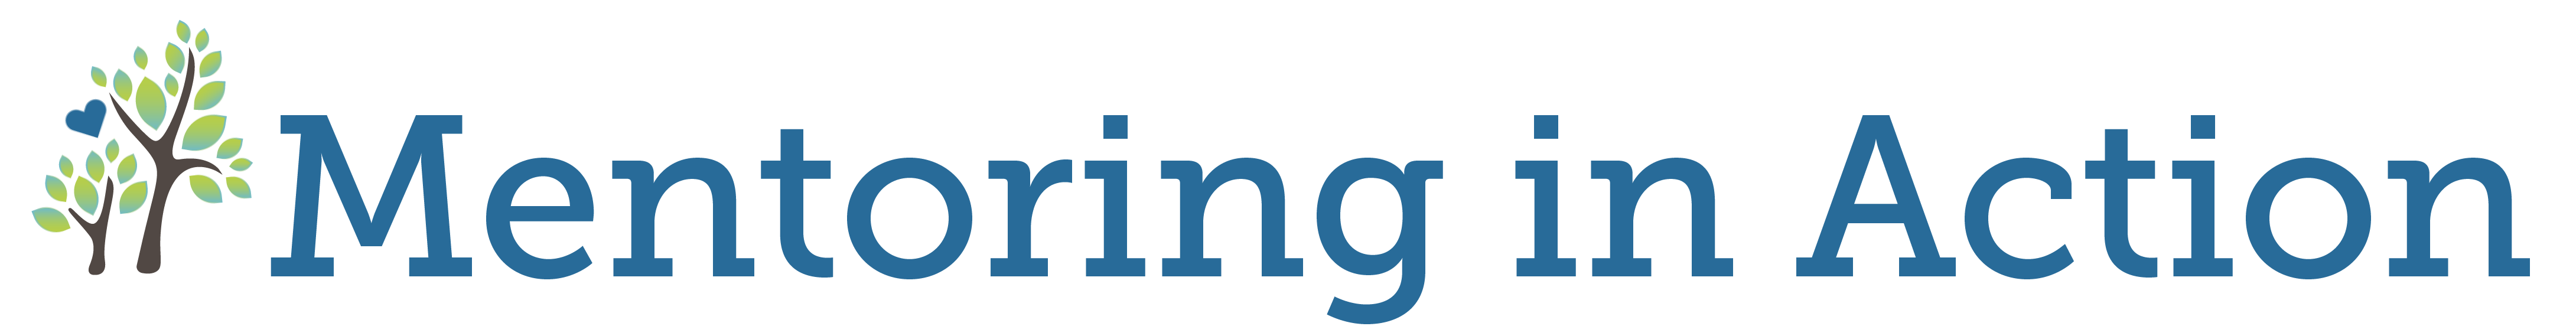 Mentoring in Action Logo